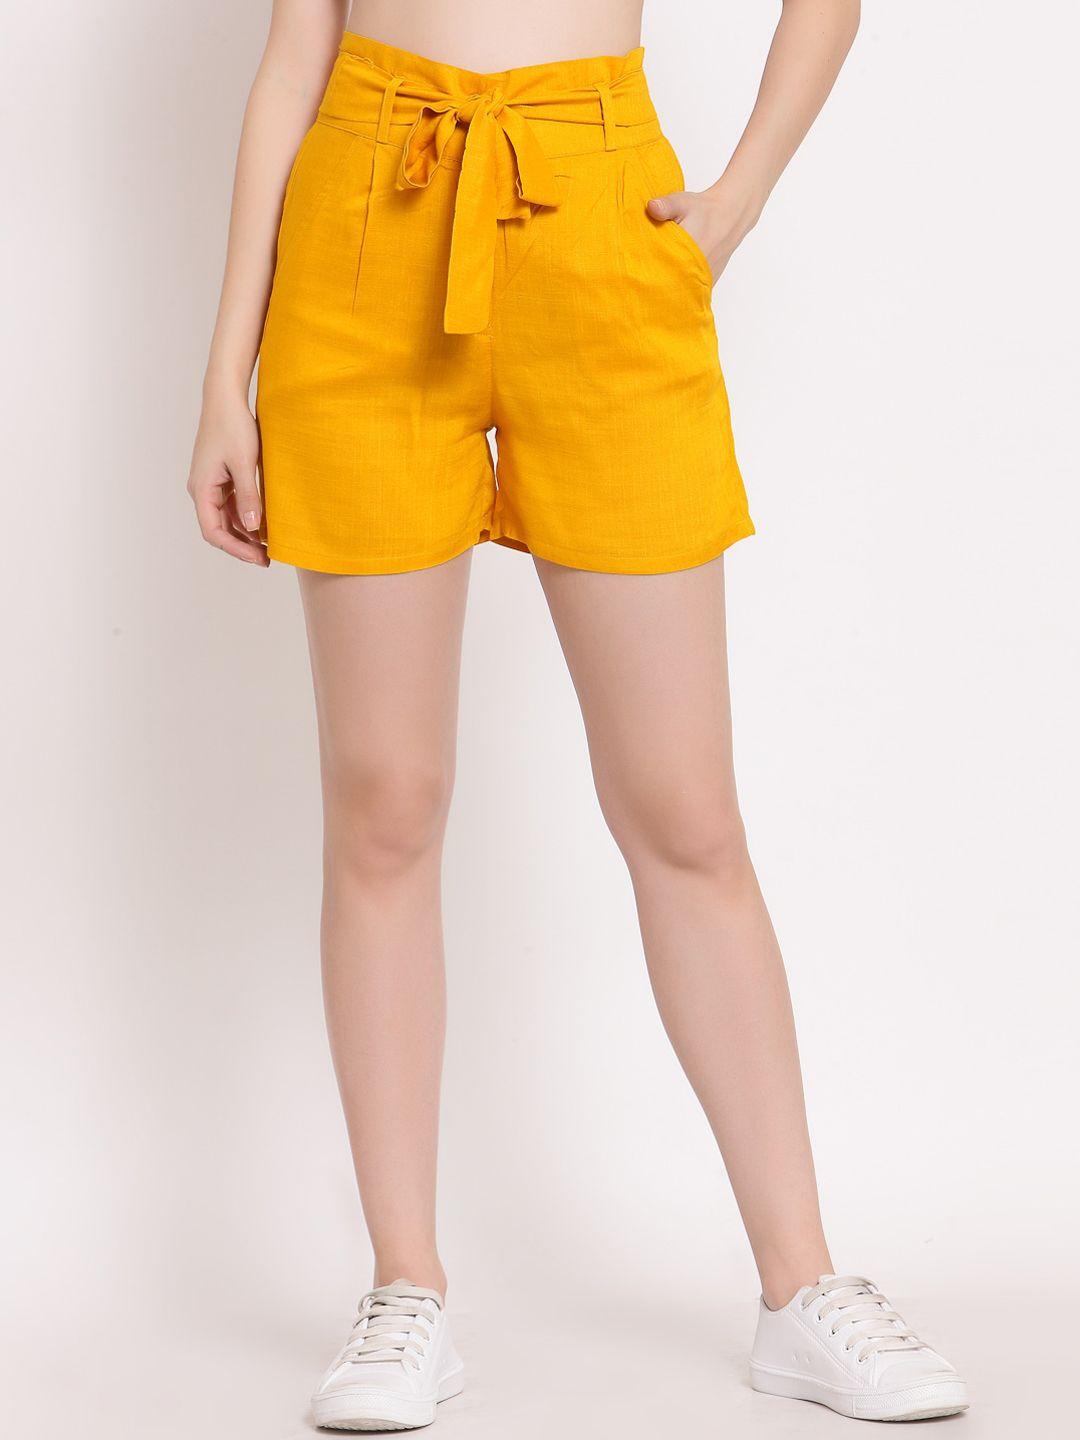 patrorna women mustard high-rise shorts